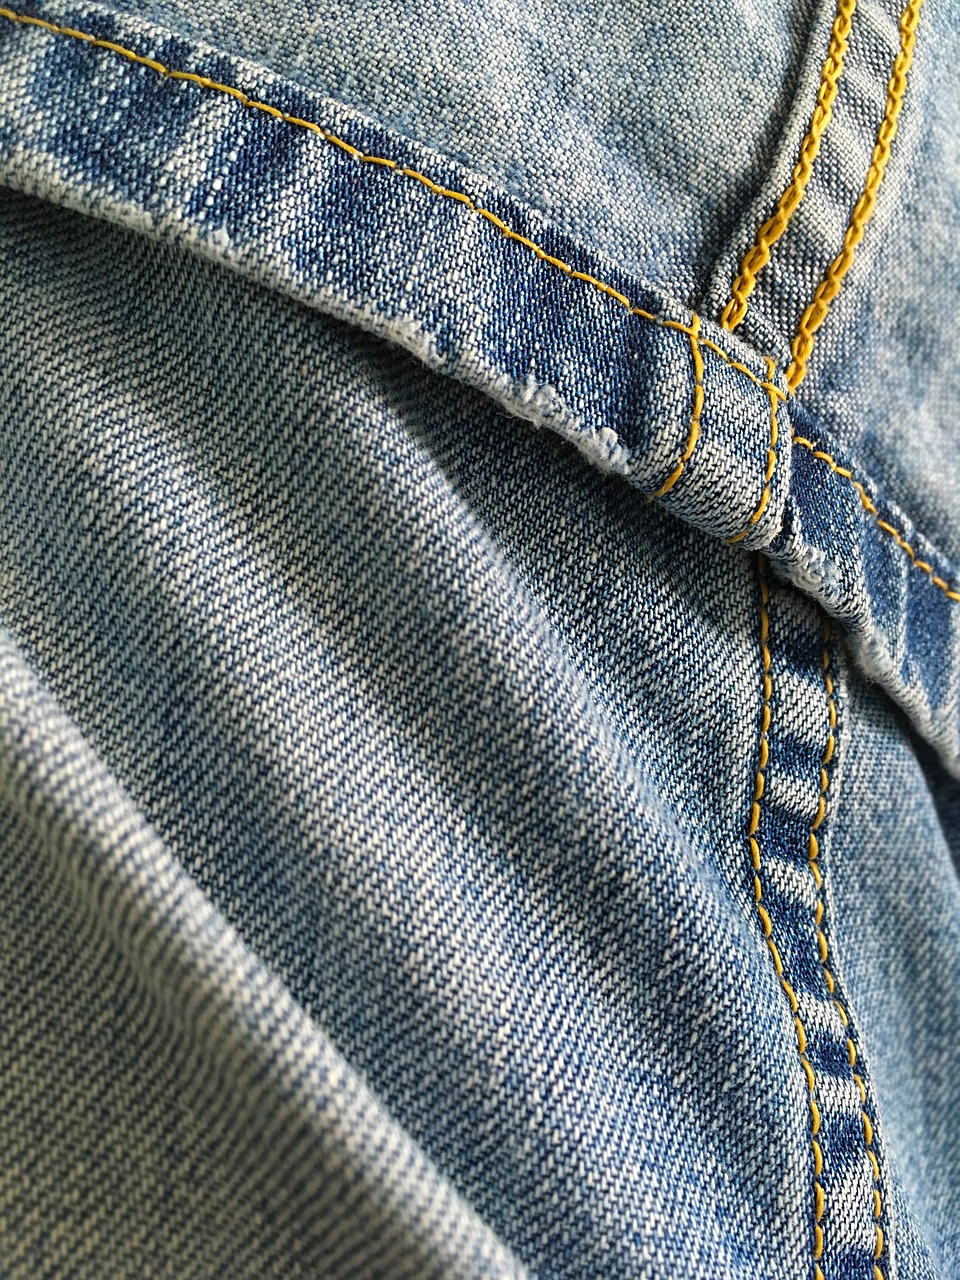 jeans fabric blue free photo